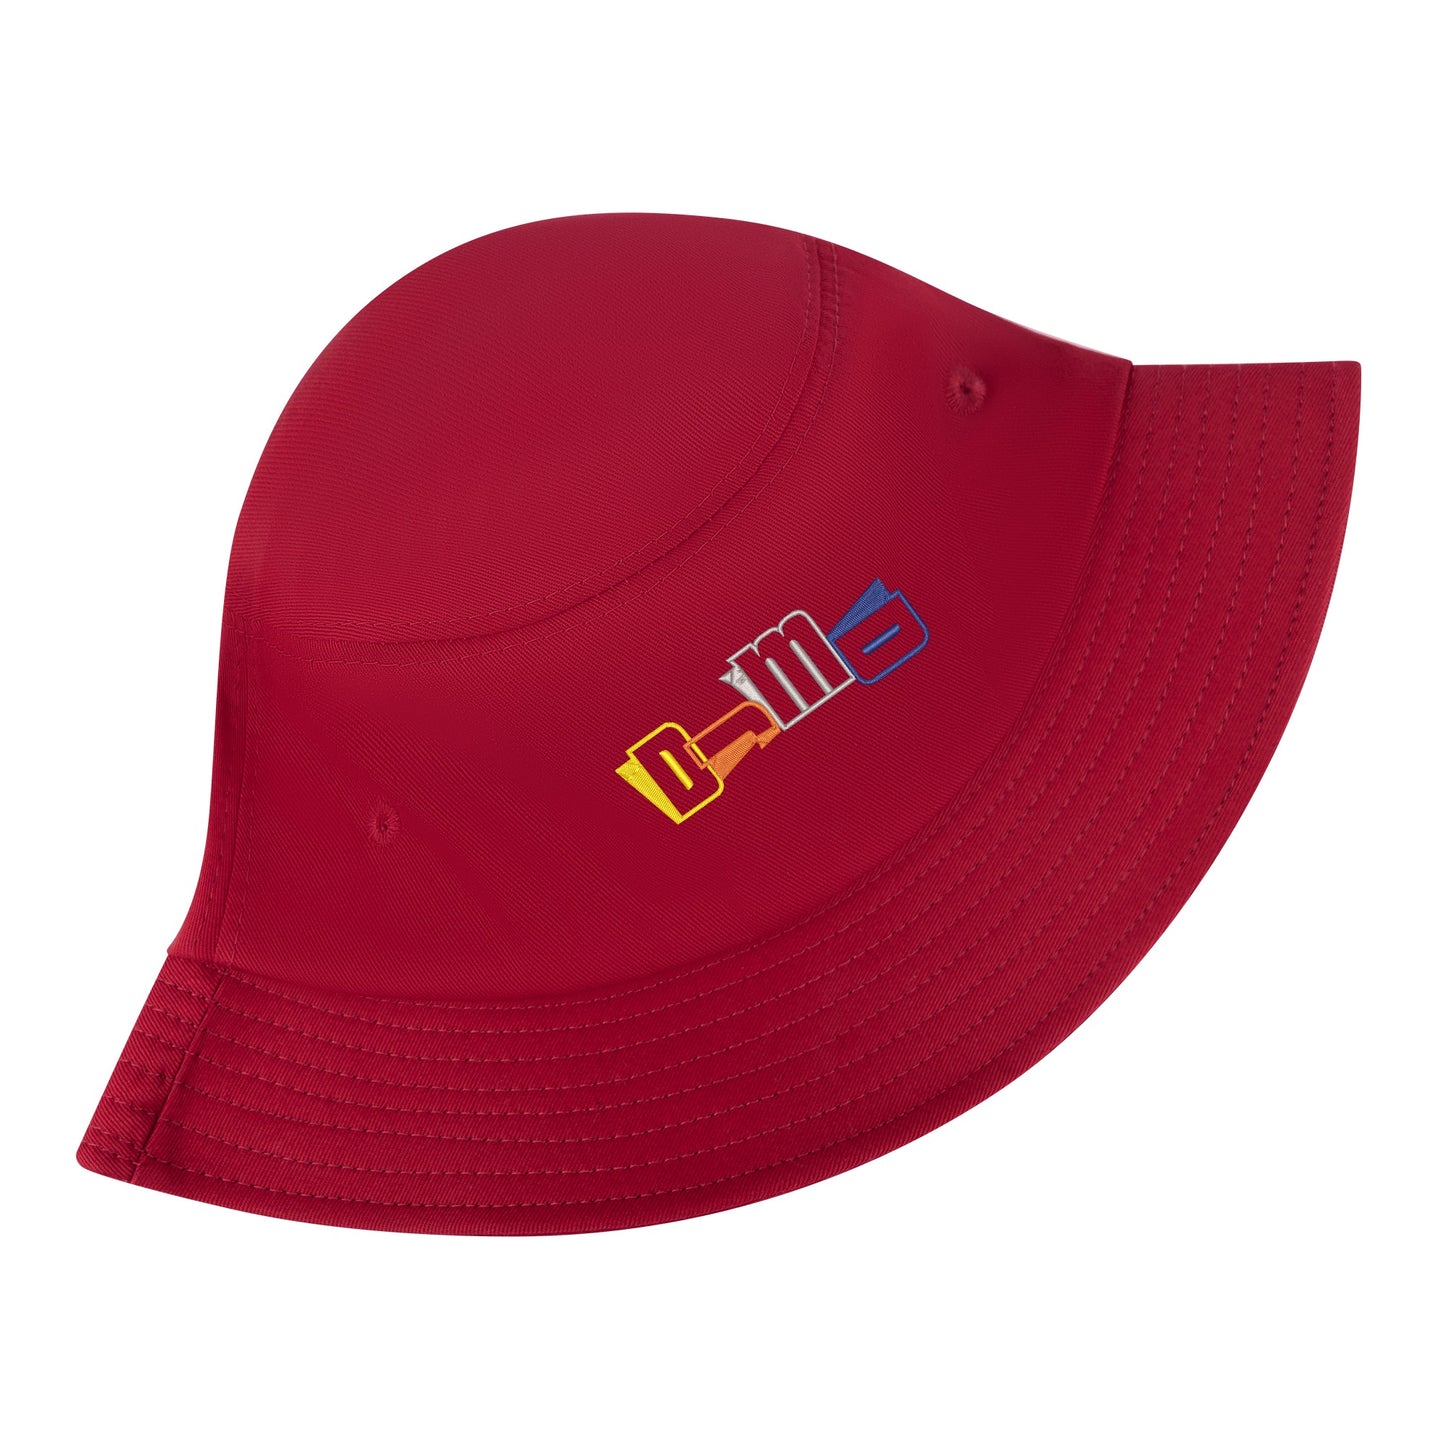 DJMD Unisex Fashion Embroidered Bucket Hats